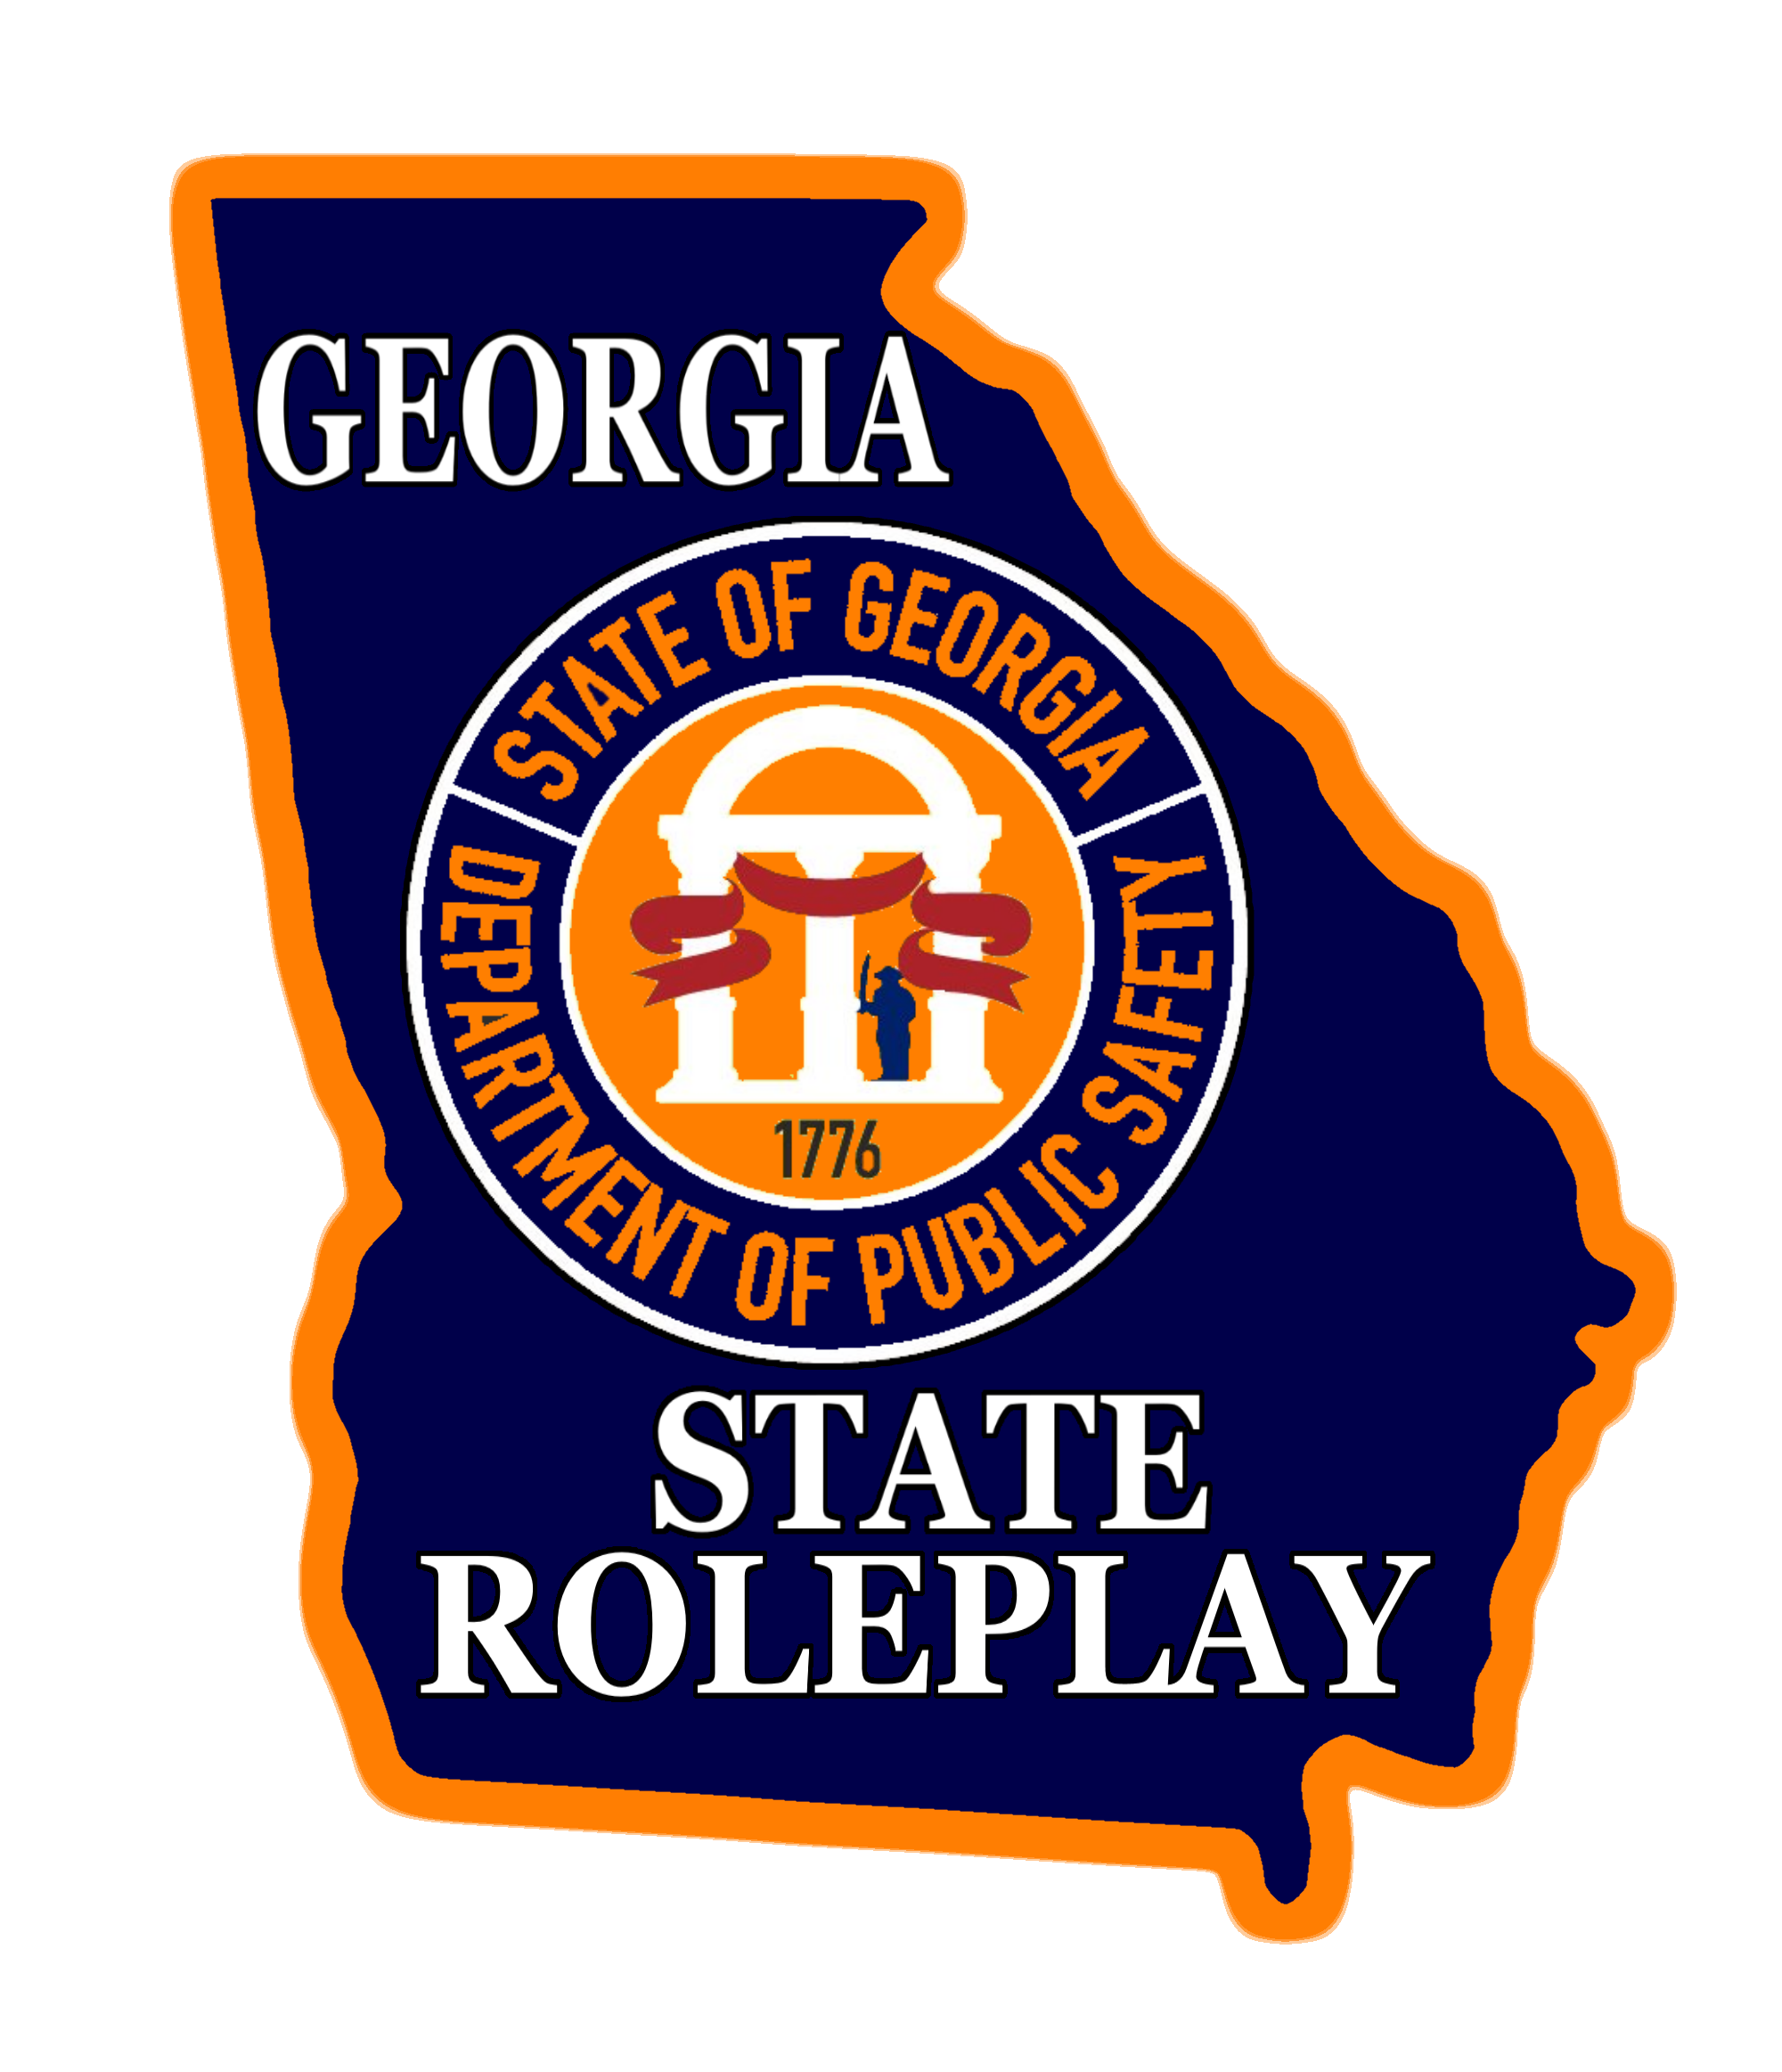 Georgia State Roleplay